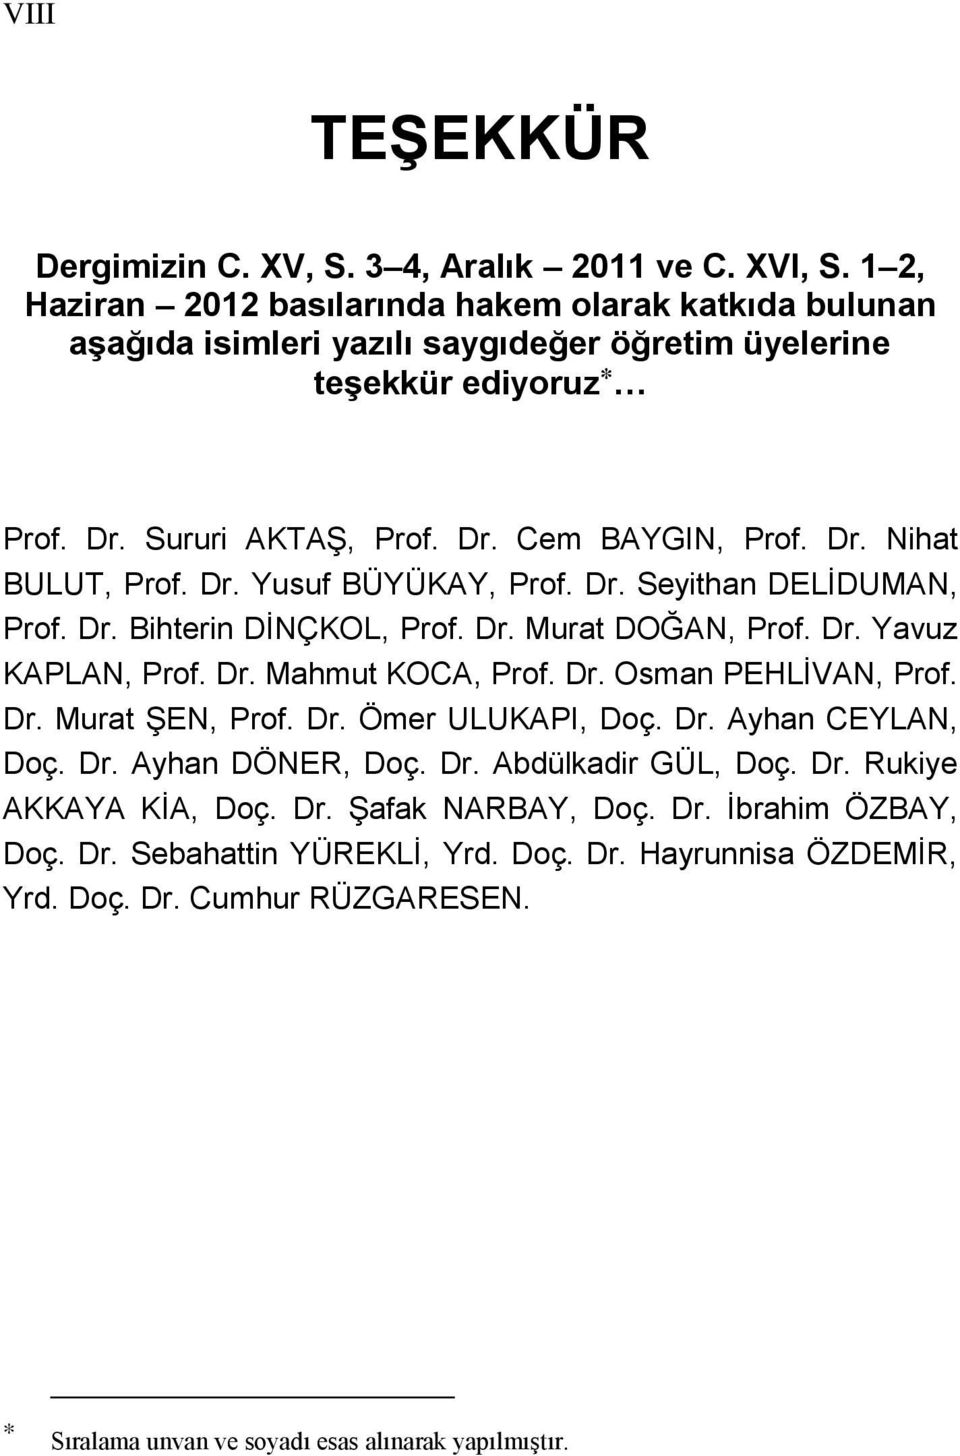 Dr. Yusuf BÜYÜKAY, Prof. Dr. Seyithan DELİDUMAN, Prof. Dr. Bihterin DİNÇKOL, Prof. Dr. Murat DOĞAN, Prof. Dr. Yavuz KAPLAN, Prof. Dr. Mahmut KOCA, Prof. Dr. Osman PEHLİVAN, Prof. Dr. Murat ŞEN, Prof.